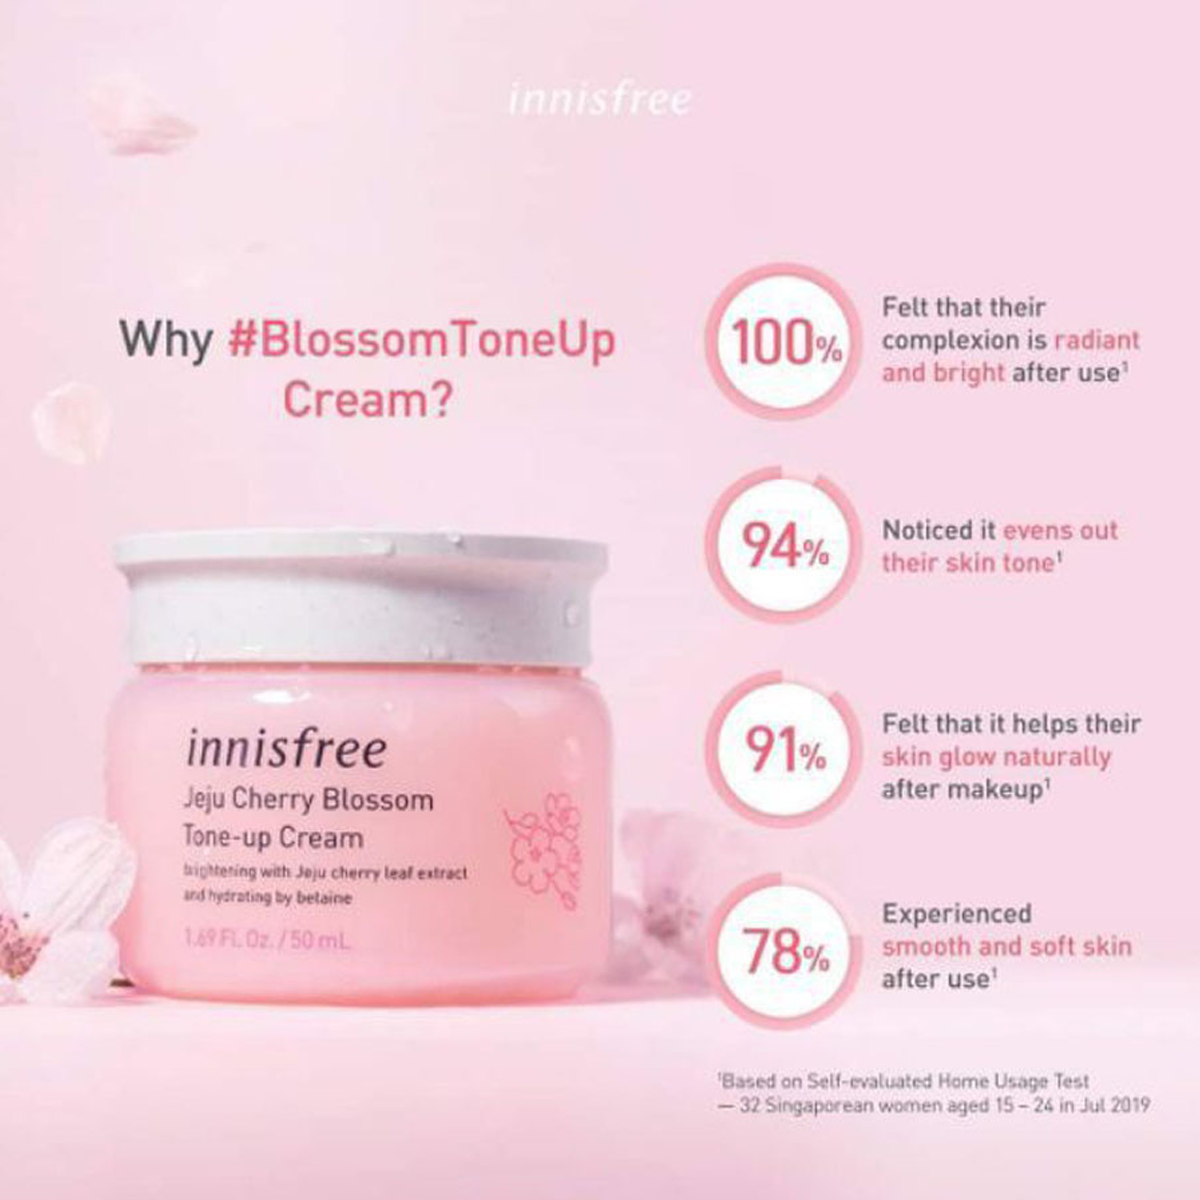 innisfree - Cherry Blossom Glow Jelly Cream